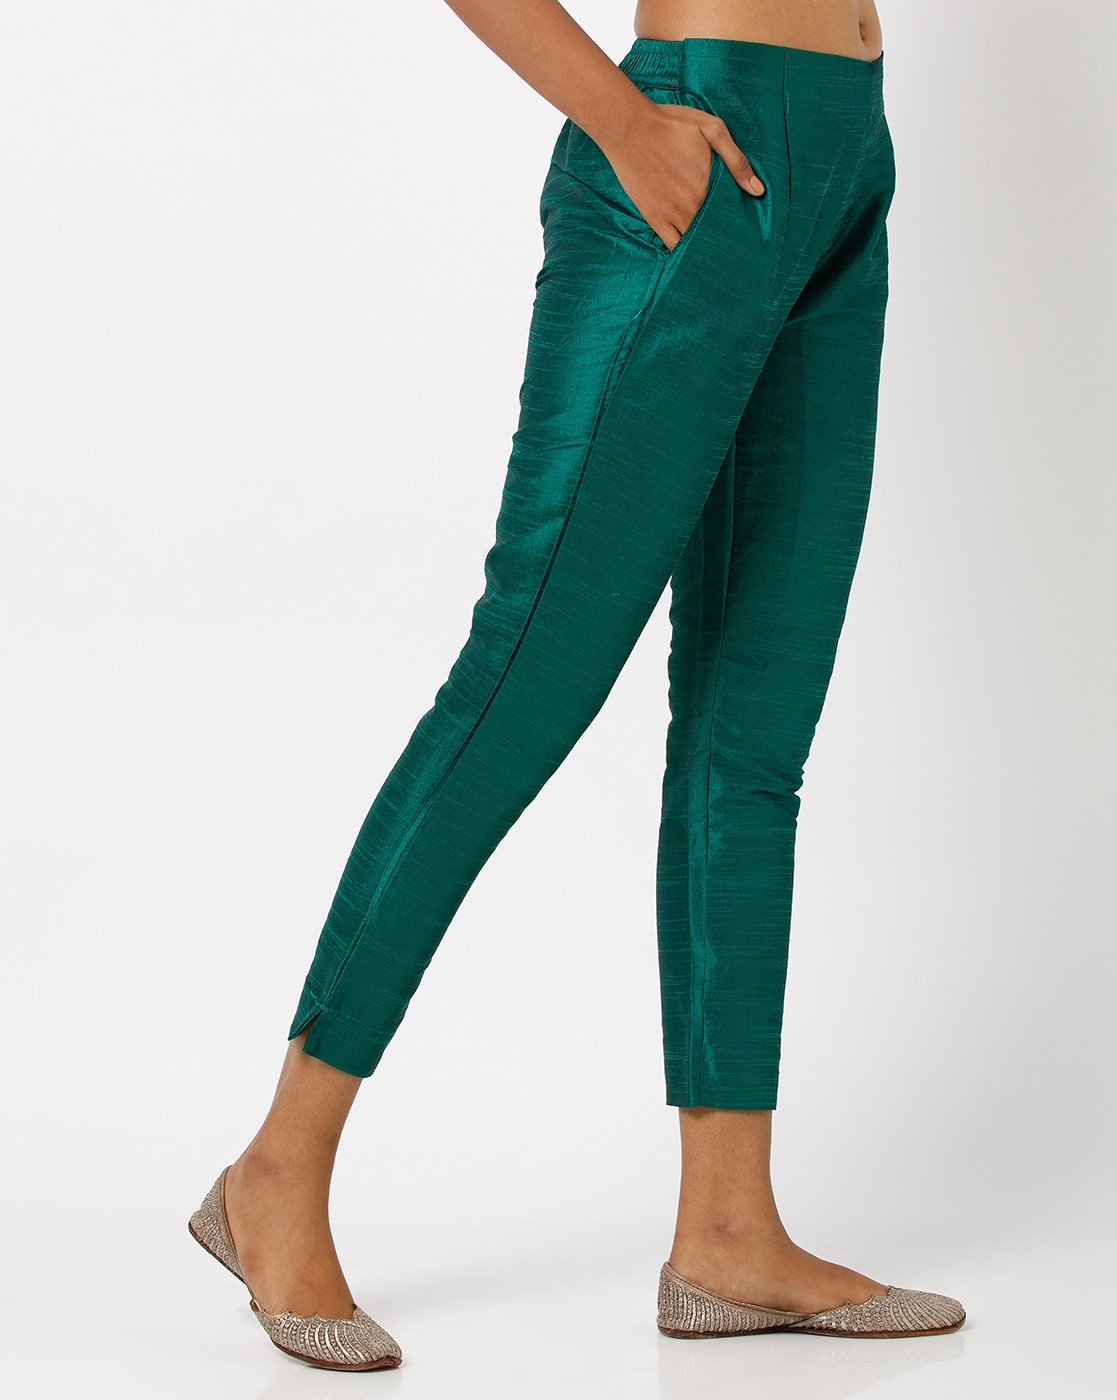 Green High Waist Pants Women, Wide Leg Cotton Pants, Cigarette Bootcut  Pencil Work Business Womens Trousers TAVROVSKA - Etsy